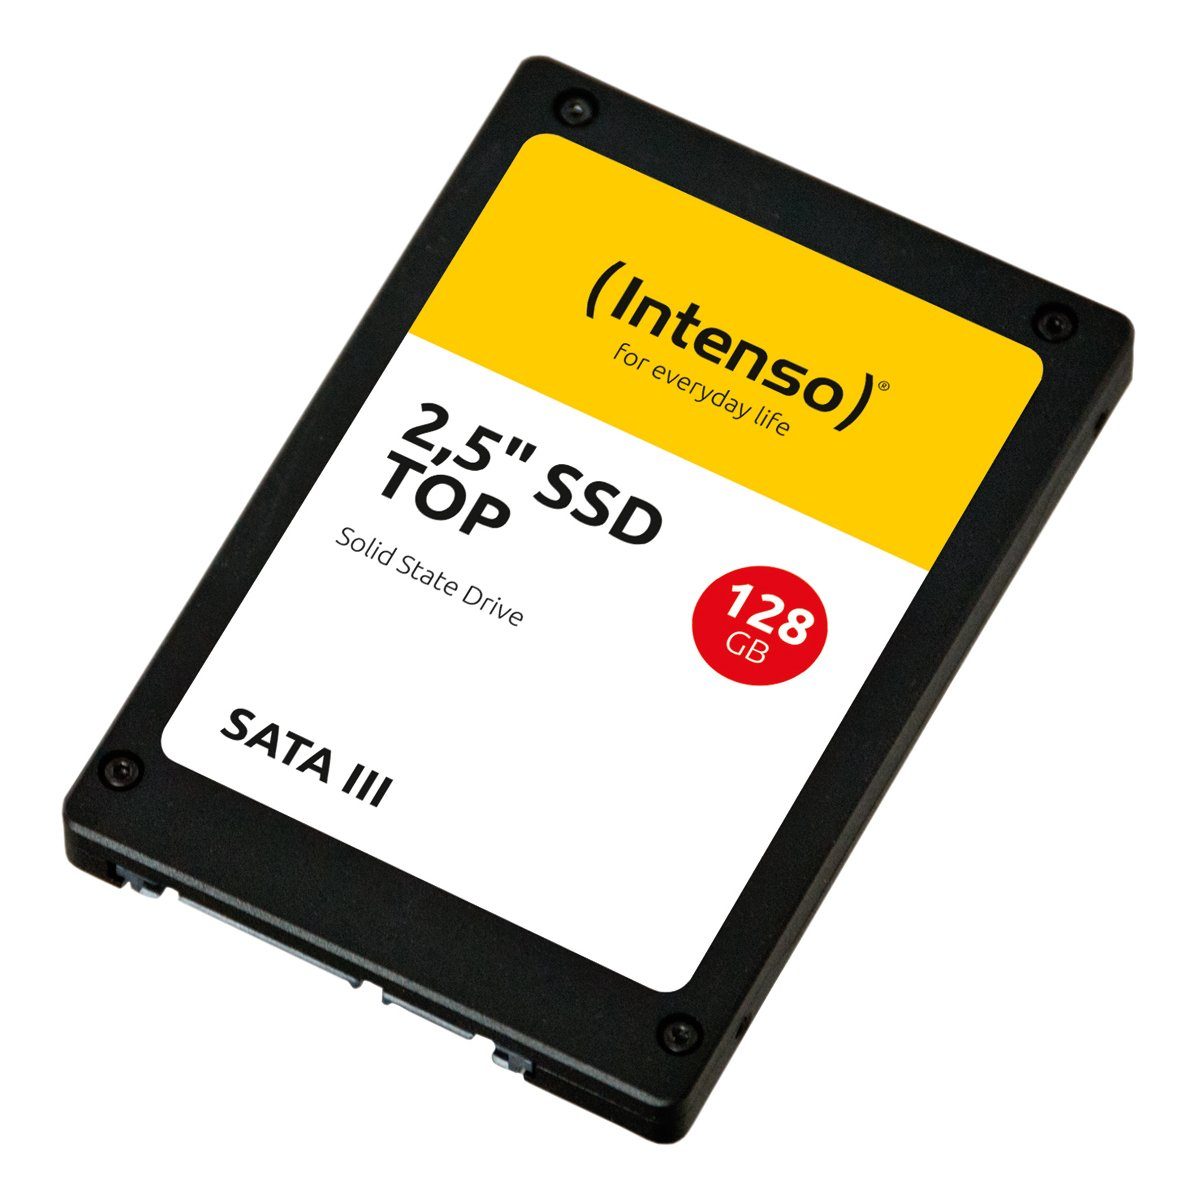 Intenso SSD 128GB Intenso SSD-Festplatte SATA3 Top